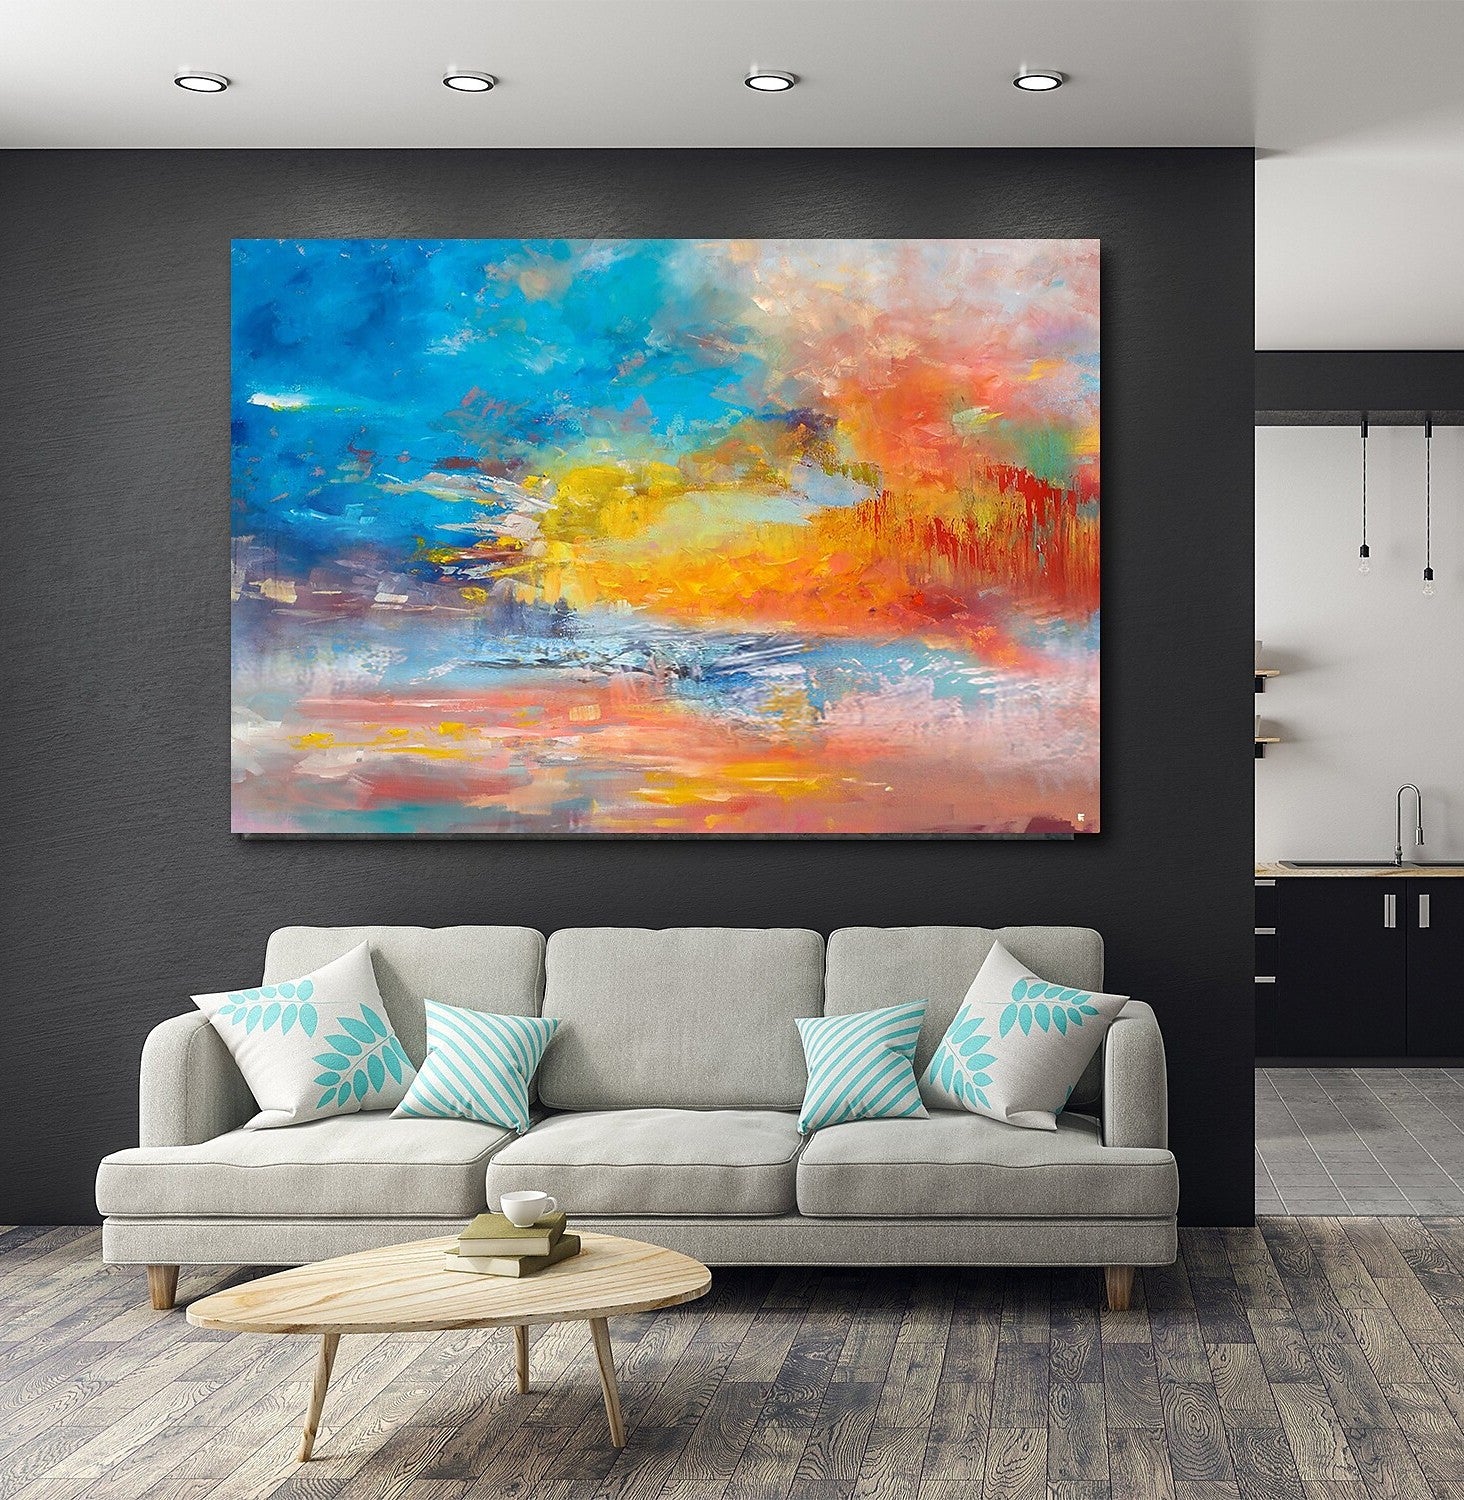 Large Paintings for Living Room, Buy Paintings Online, Wall Art Paintings for Bedroom, Simple Modern Art, Simple Abstract Art-Paintingforhome